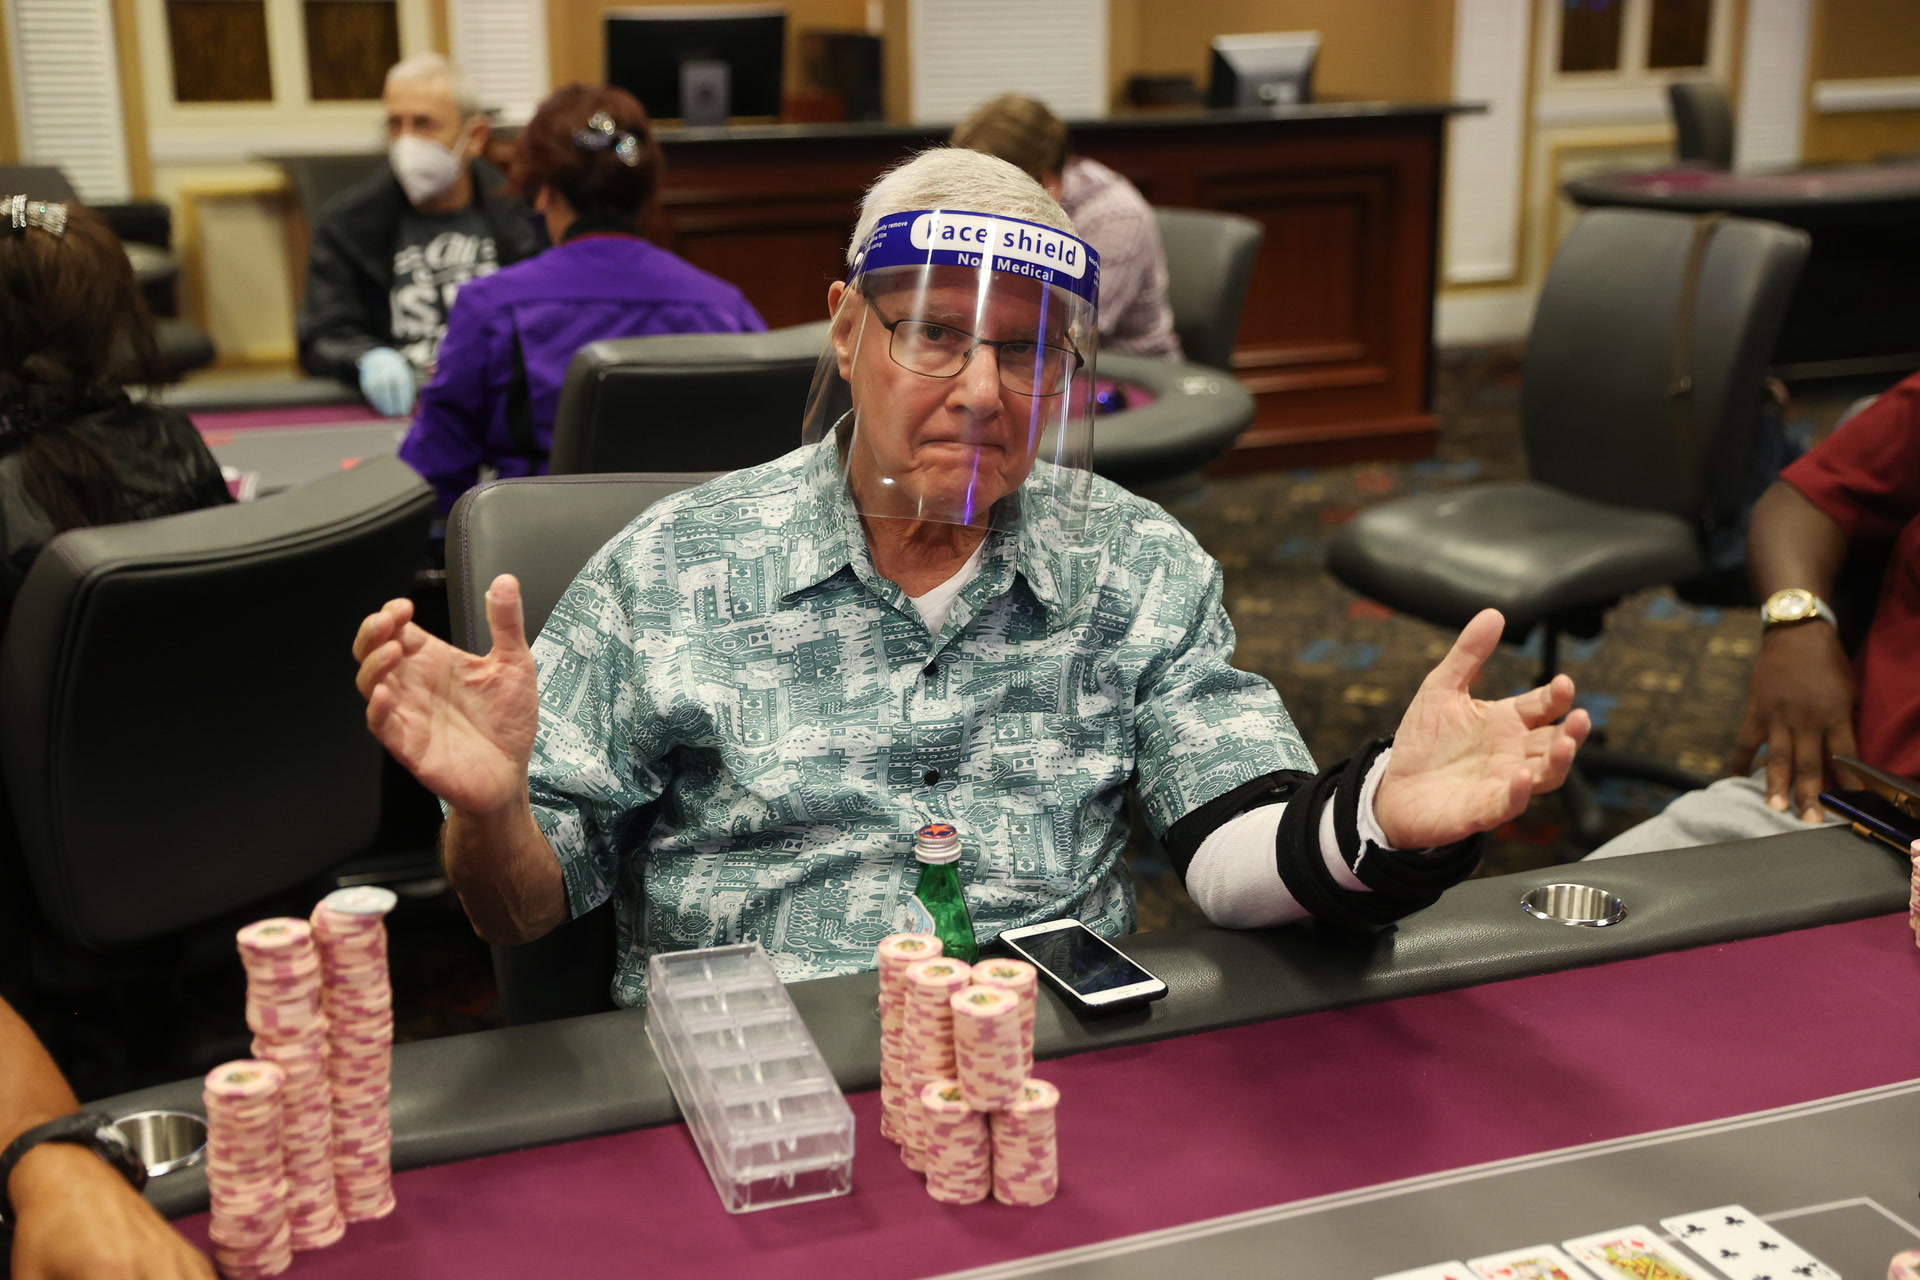 Kasino Las Vegas menyambut kembali pemain poker